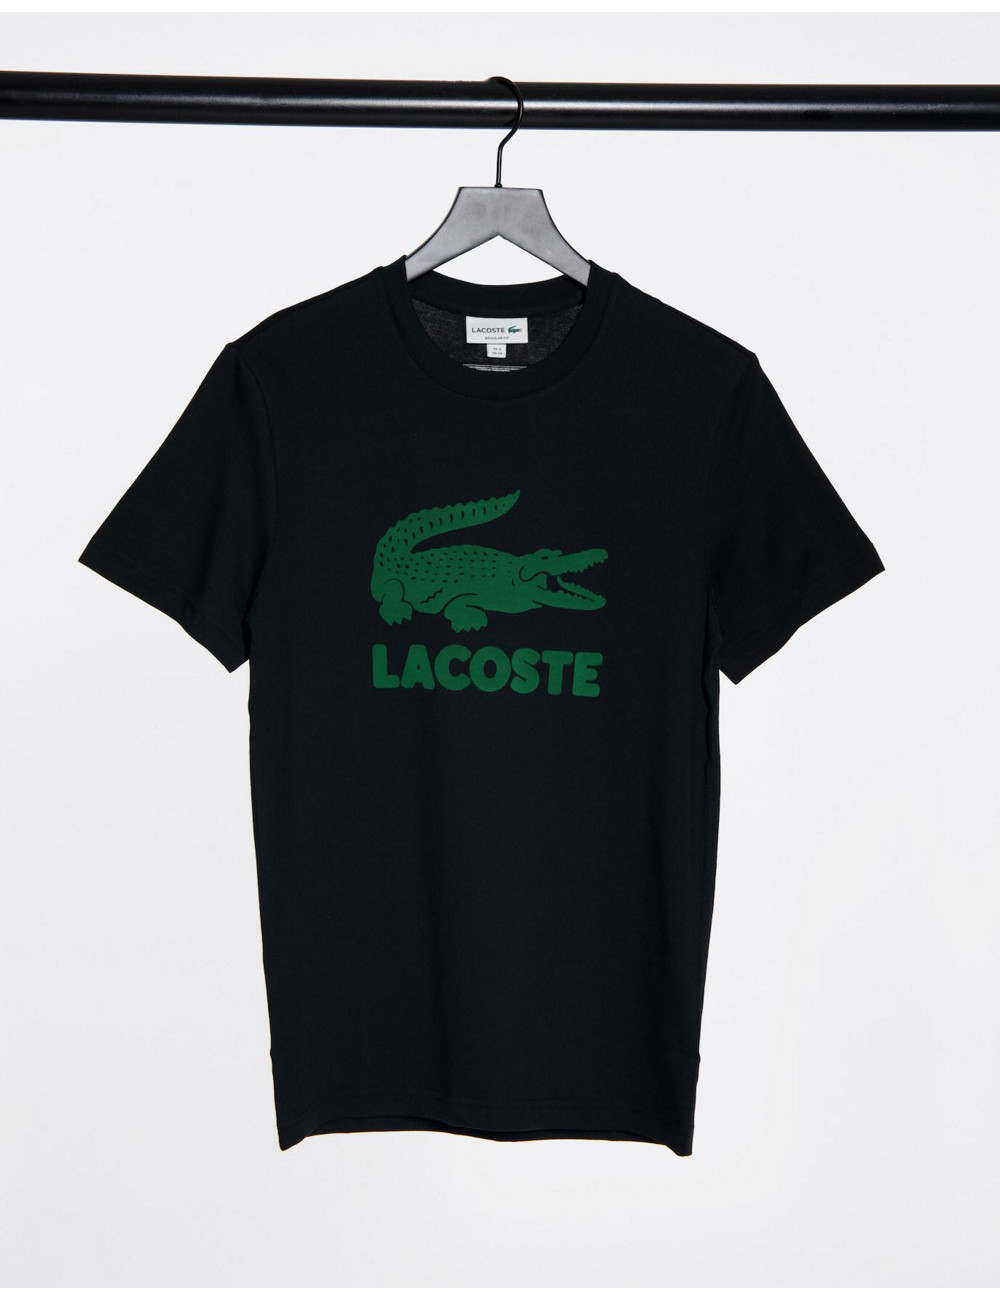 Lacoste large croc logo tee...